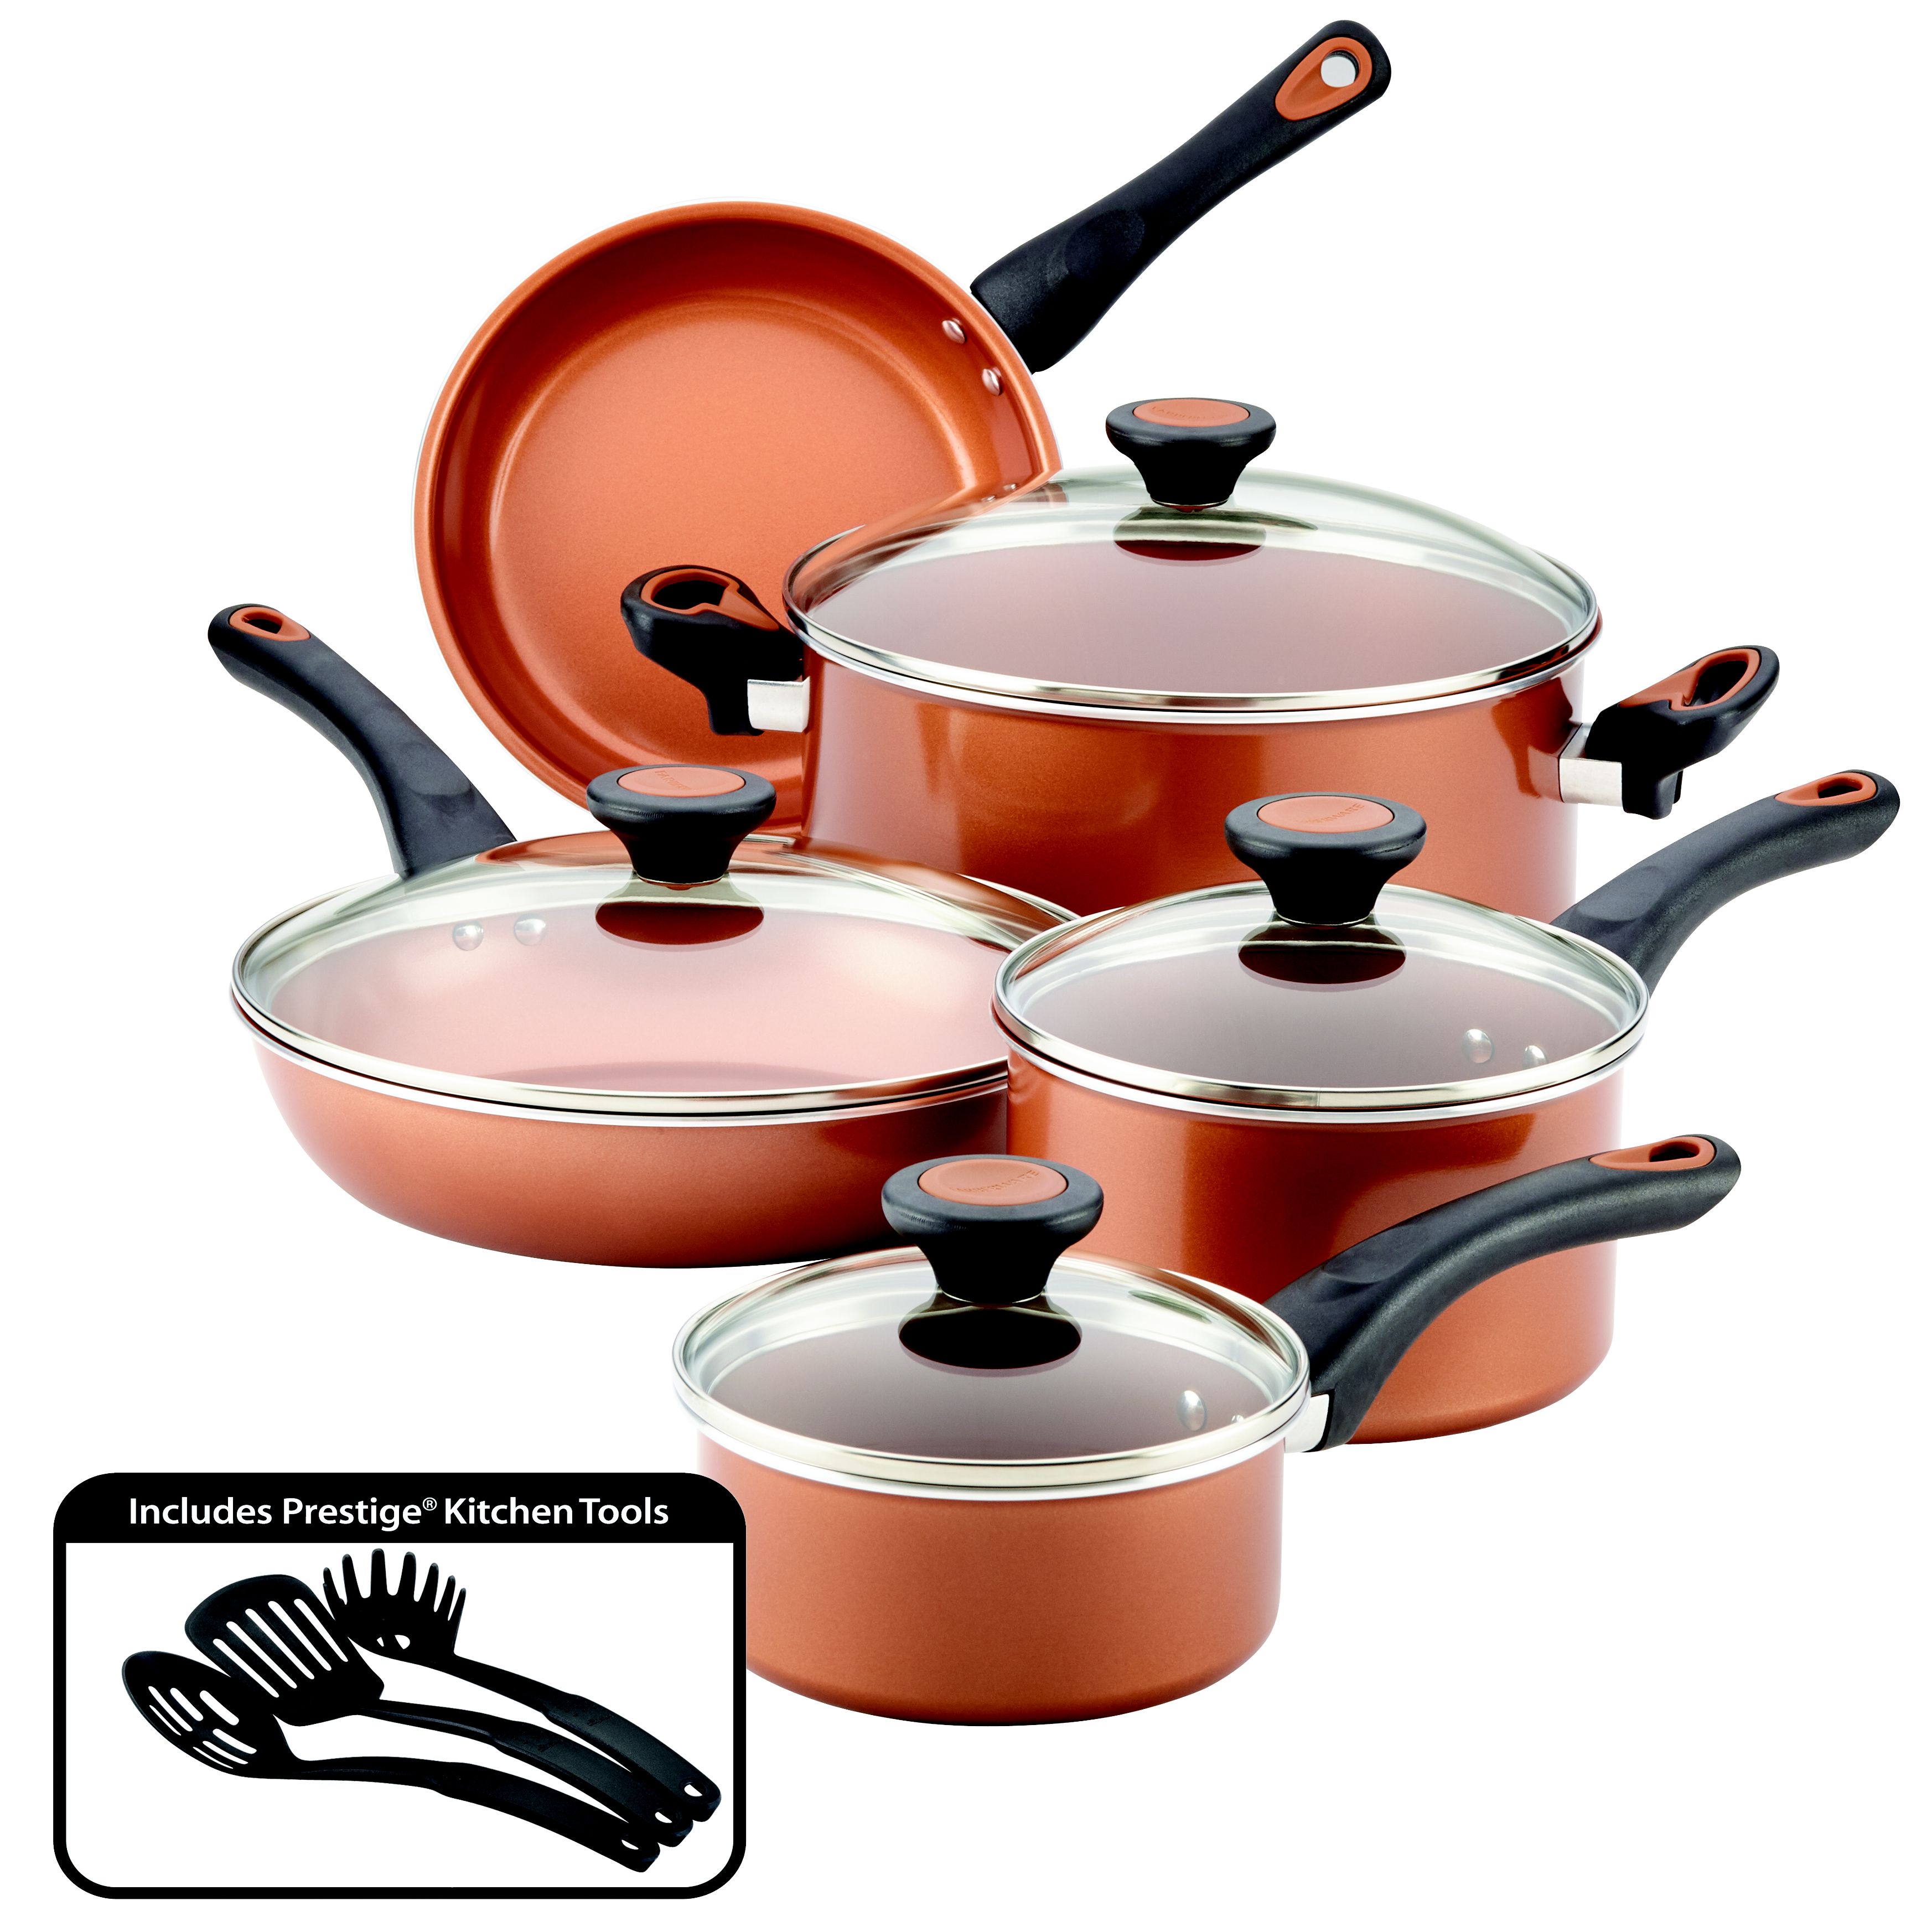 Ceramic Non-stick Pans, Copper Cooking Oven